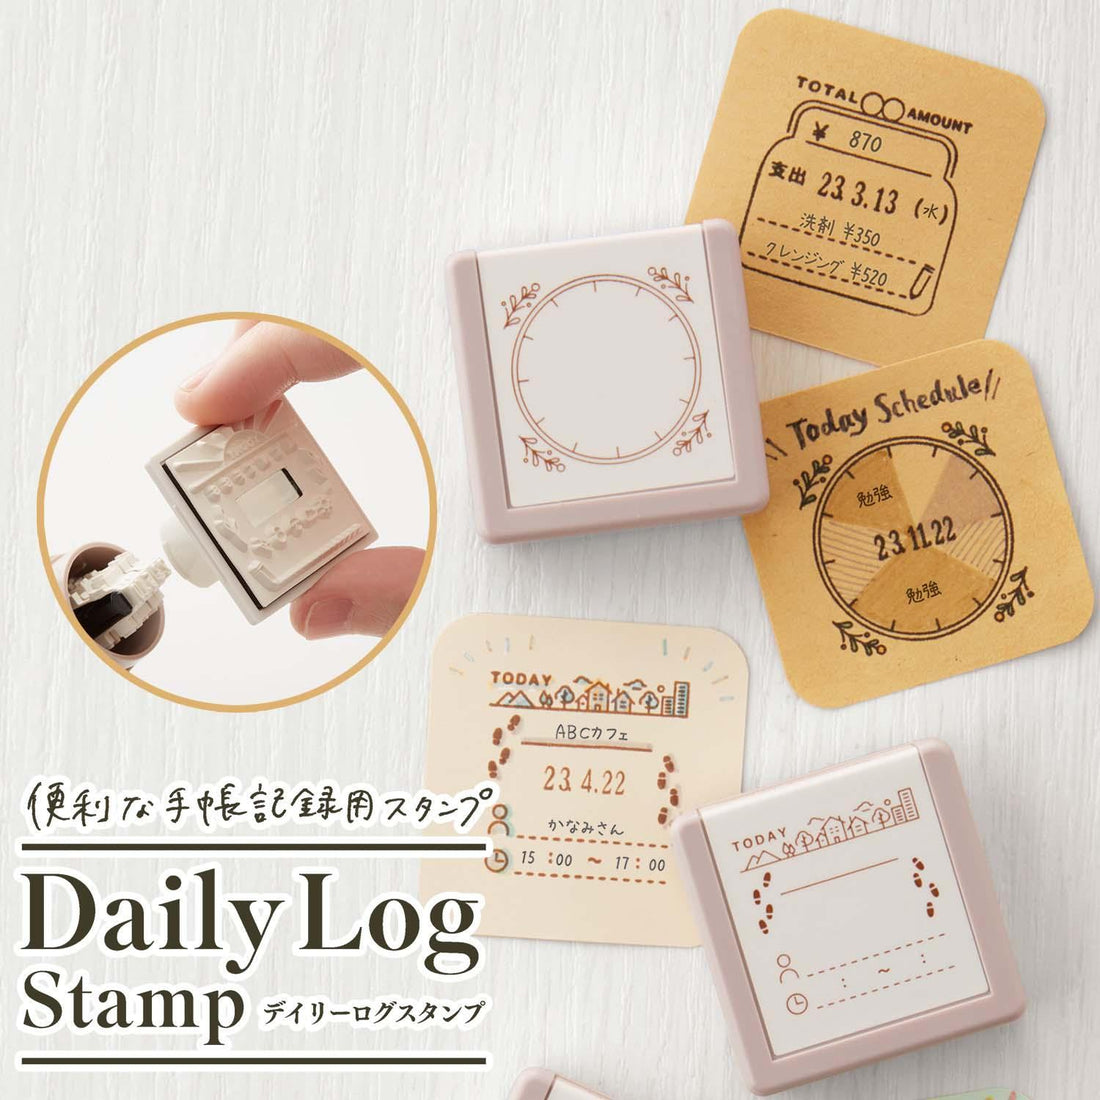 Daily Log Stamp - Training Menu - Techo Treats